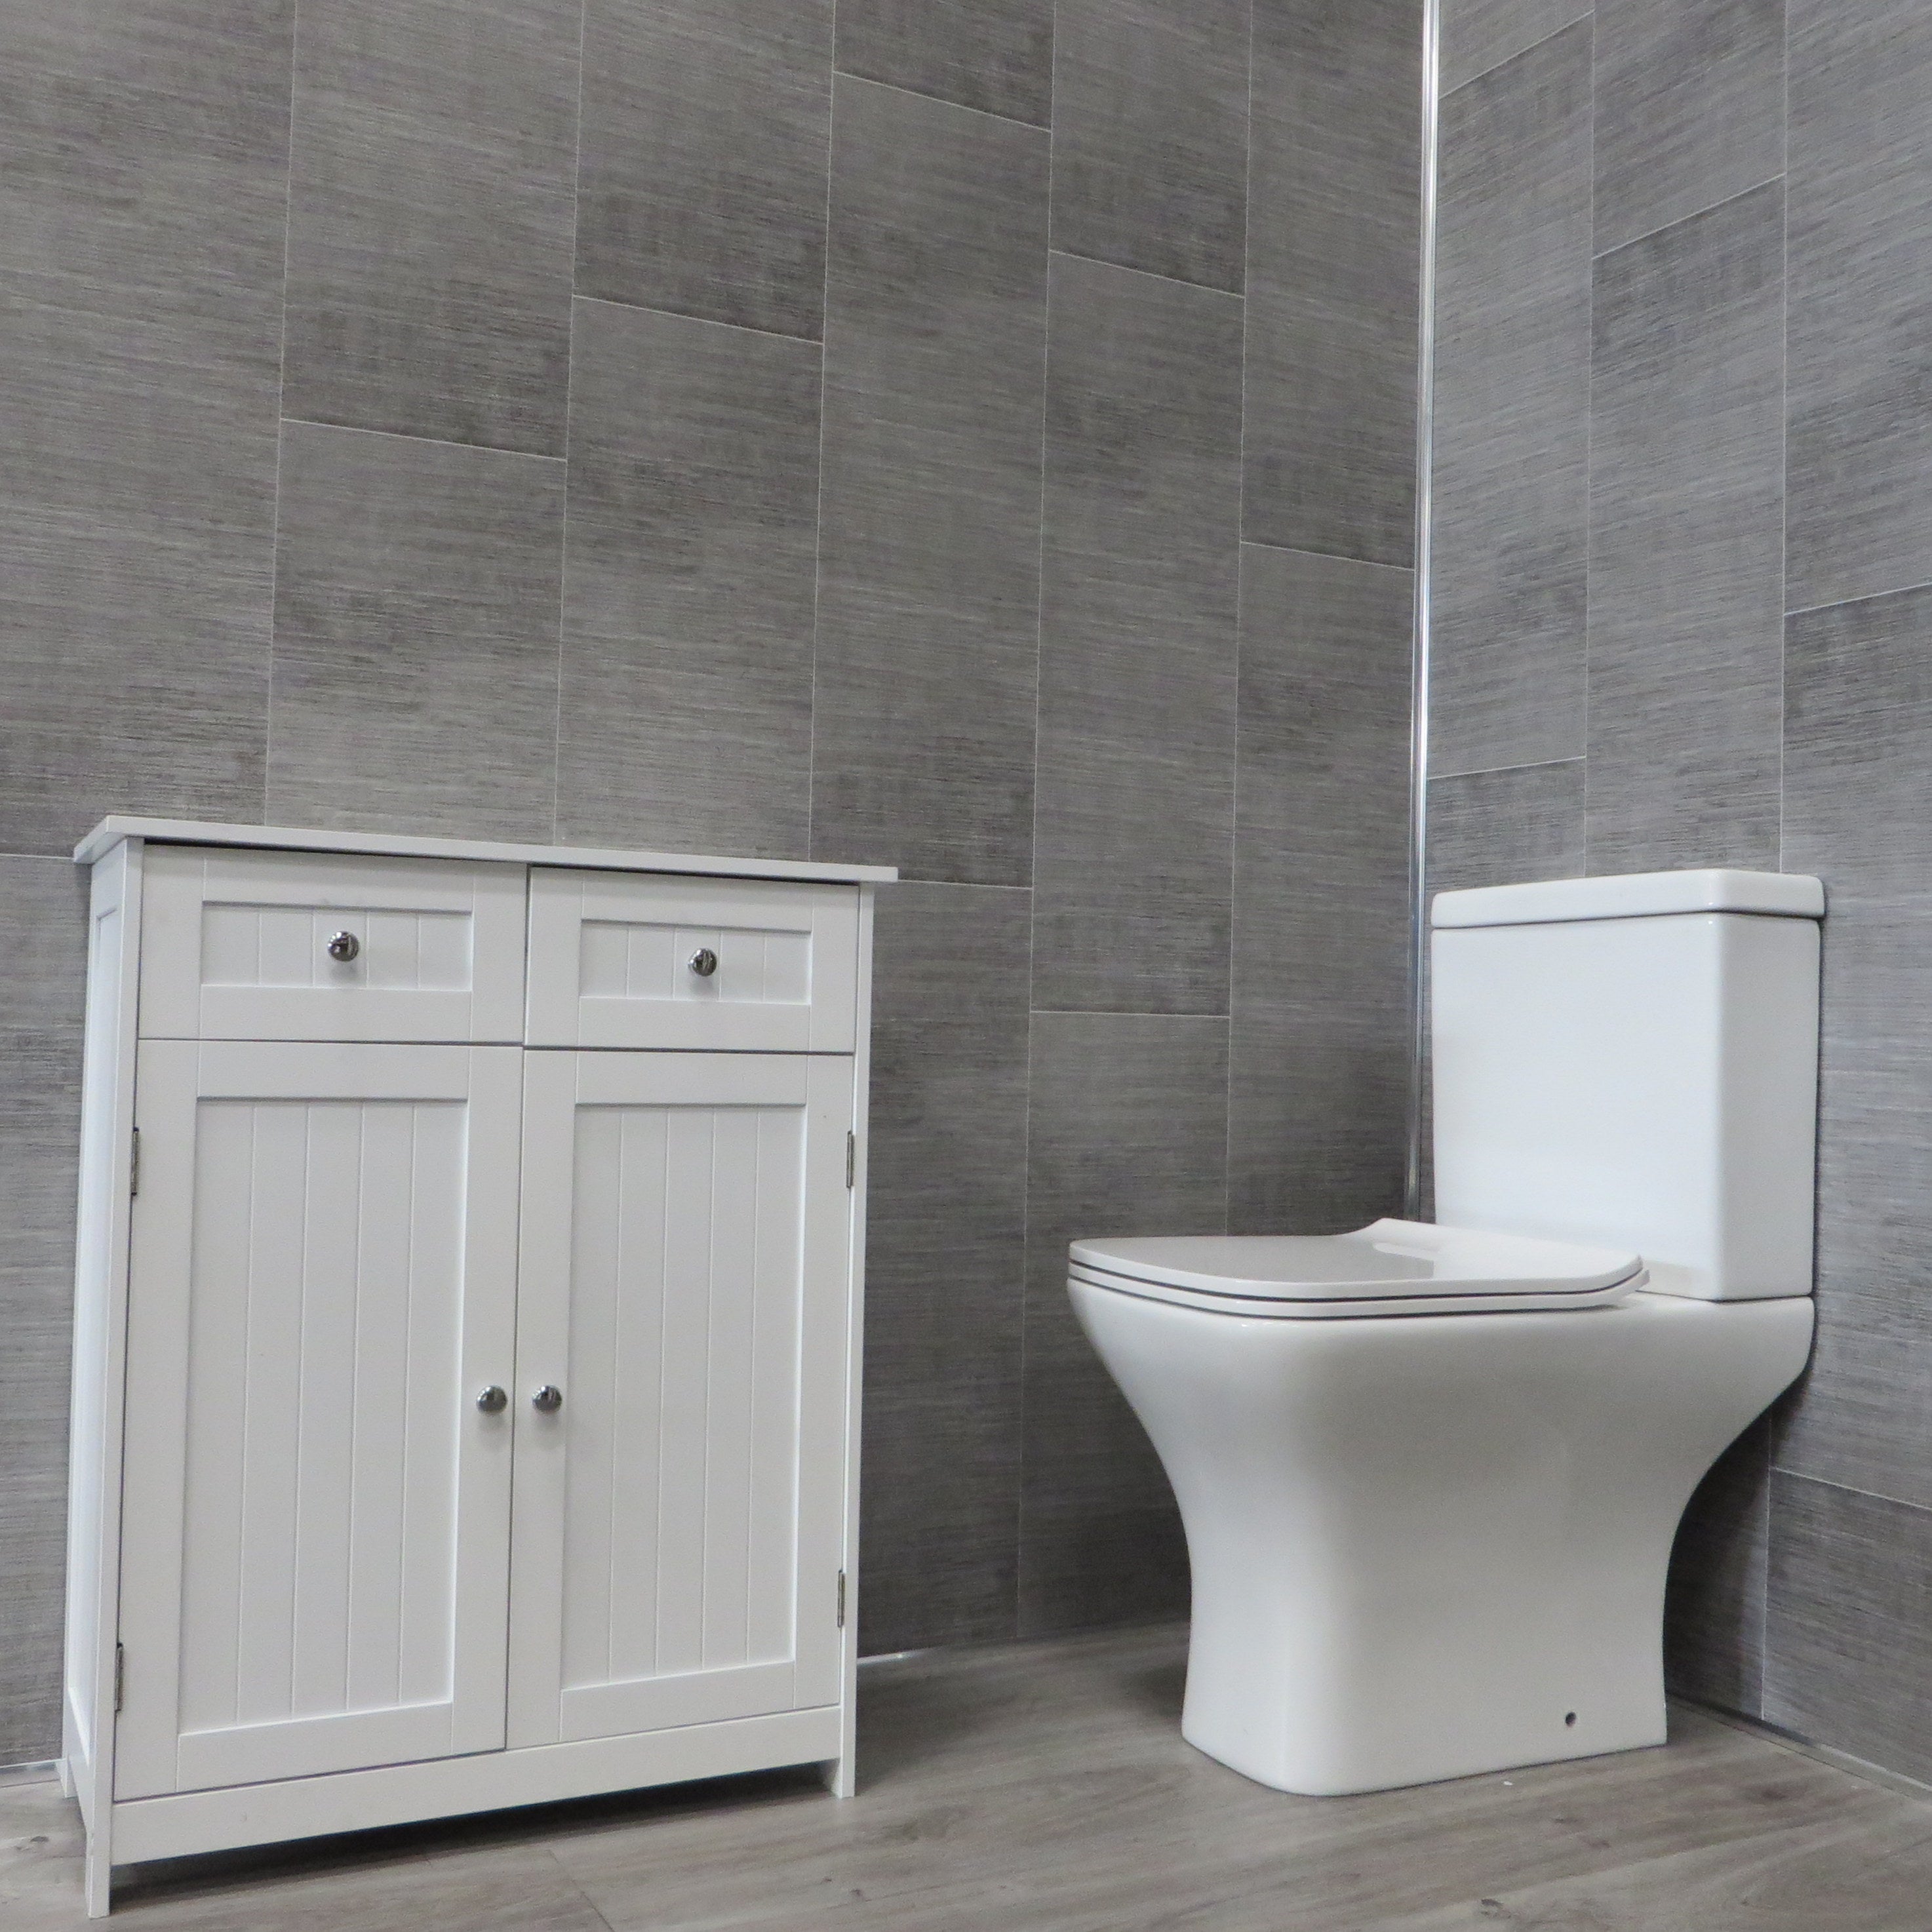 Dark Grey Large Tile 5mm Bathroom Cladding PVC Wall Panels